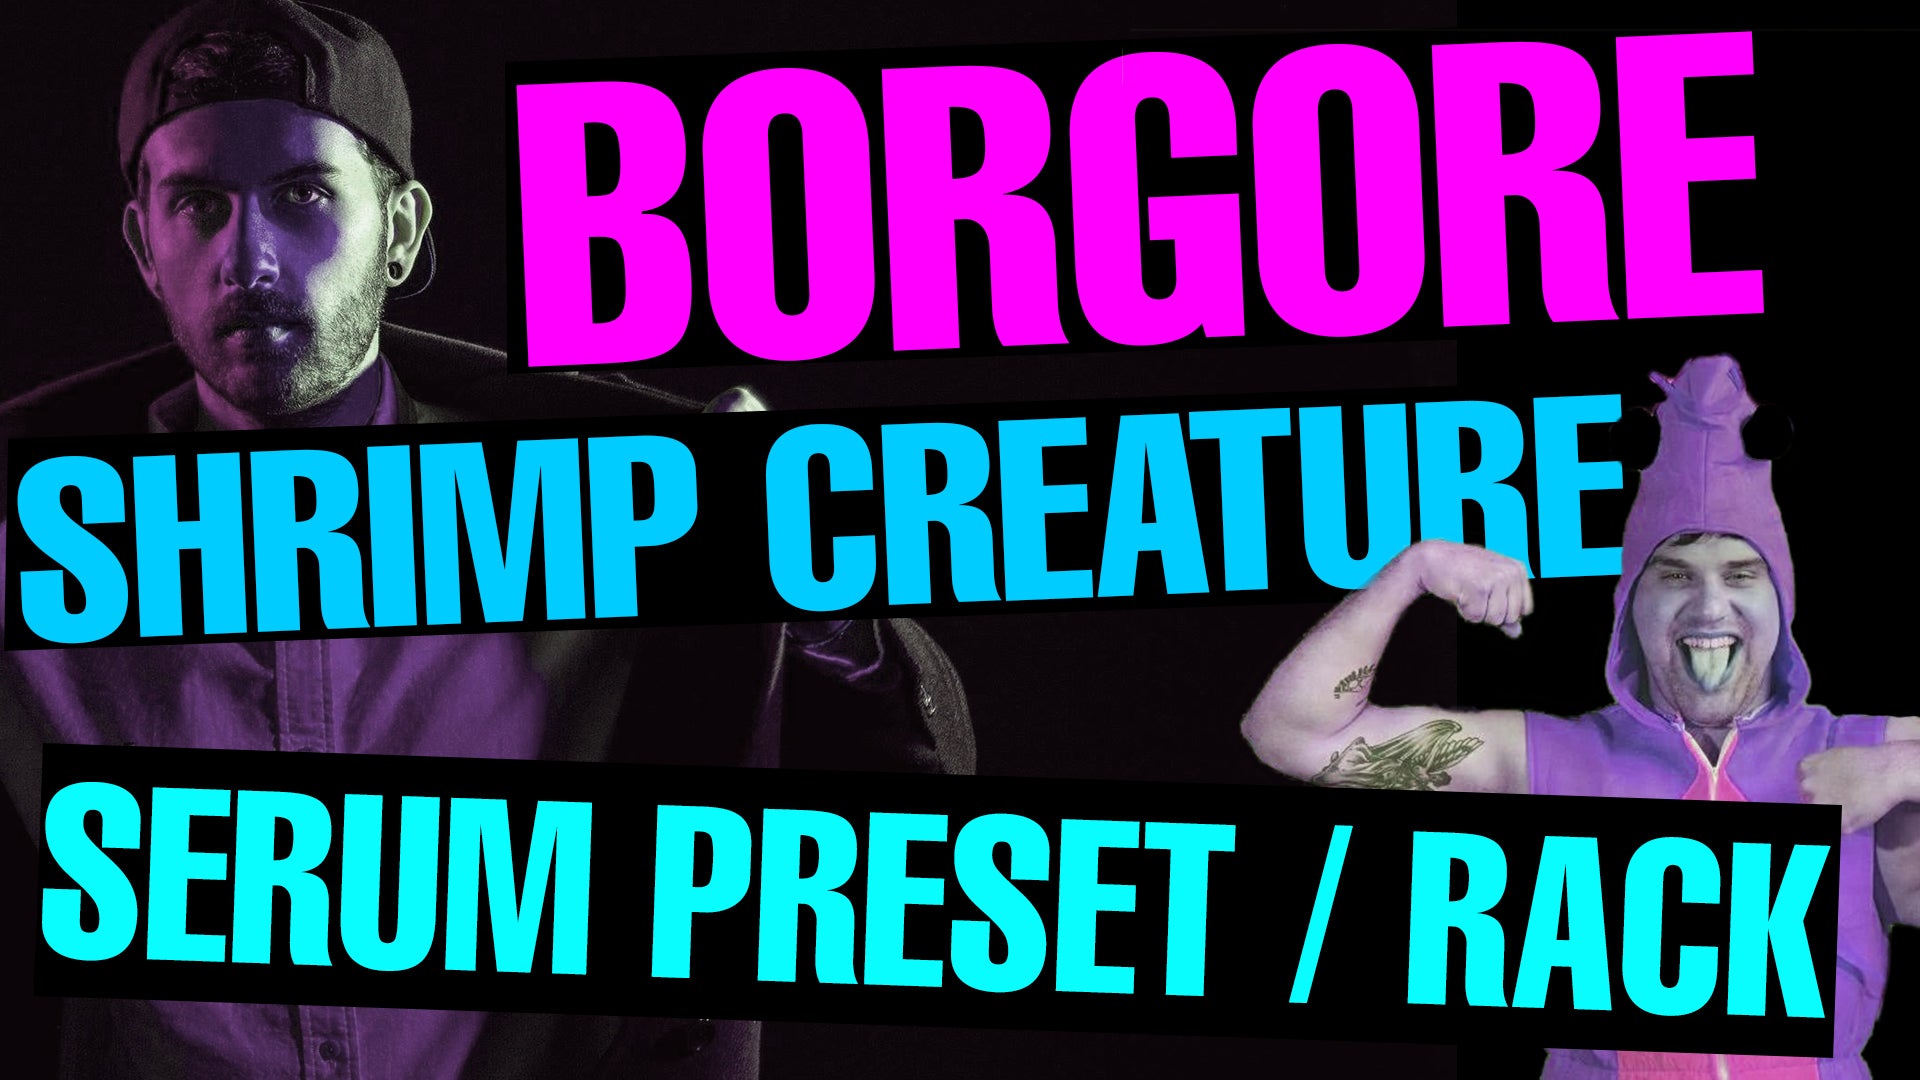 Borgore - Shrimp Creature ft Nick Colletti Serum Preset / Ableton FX Racks